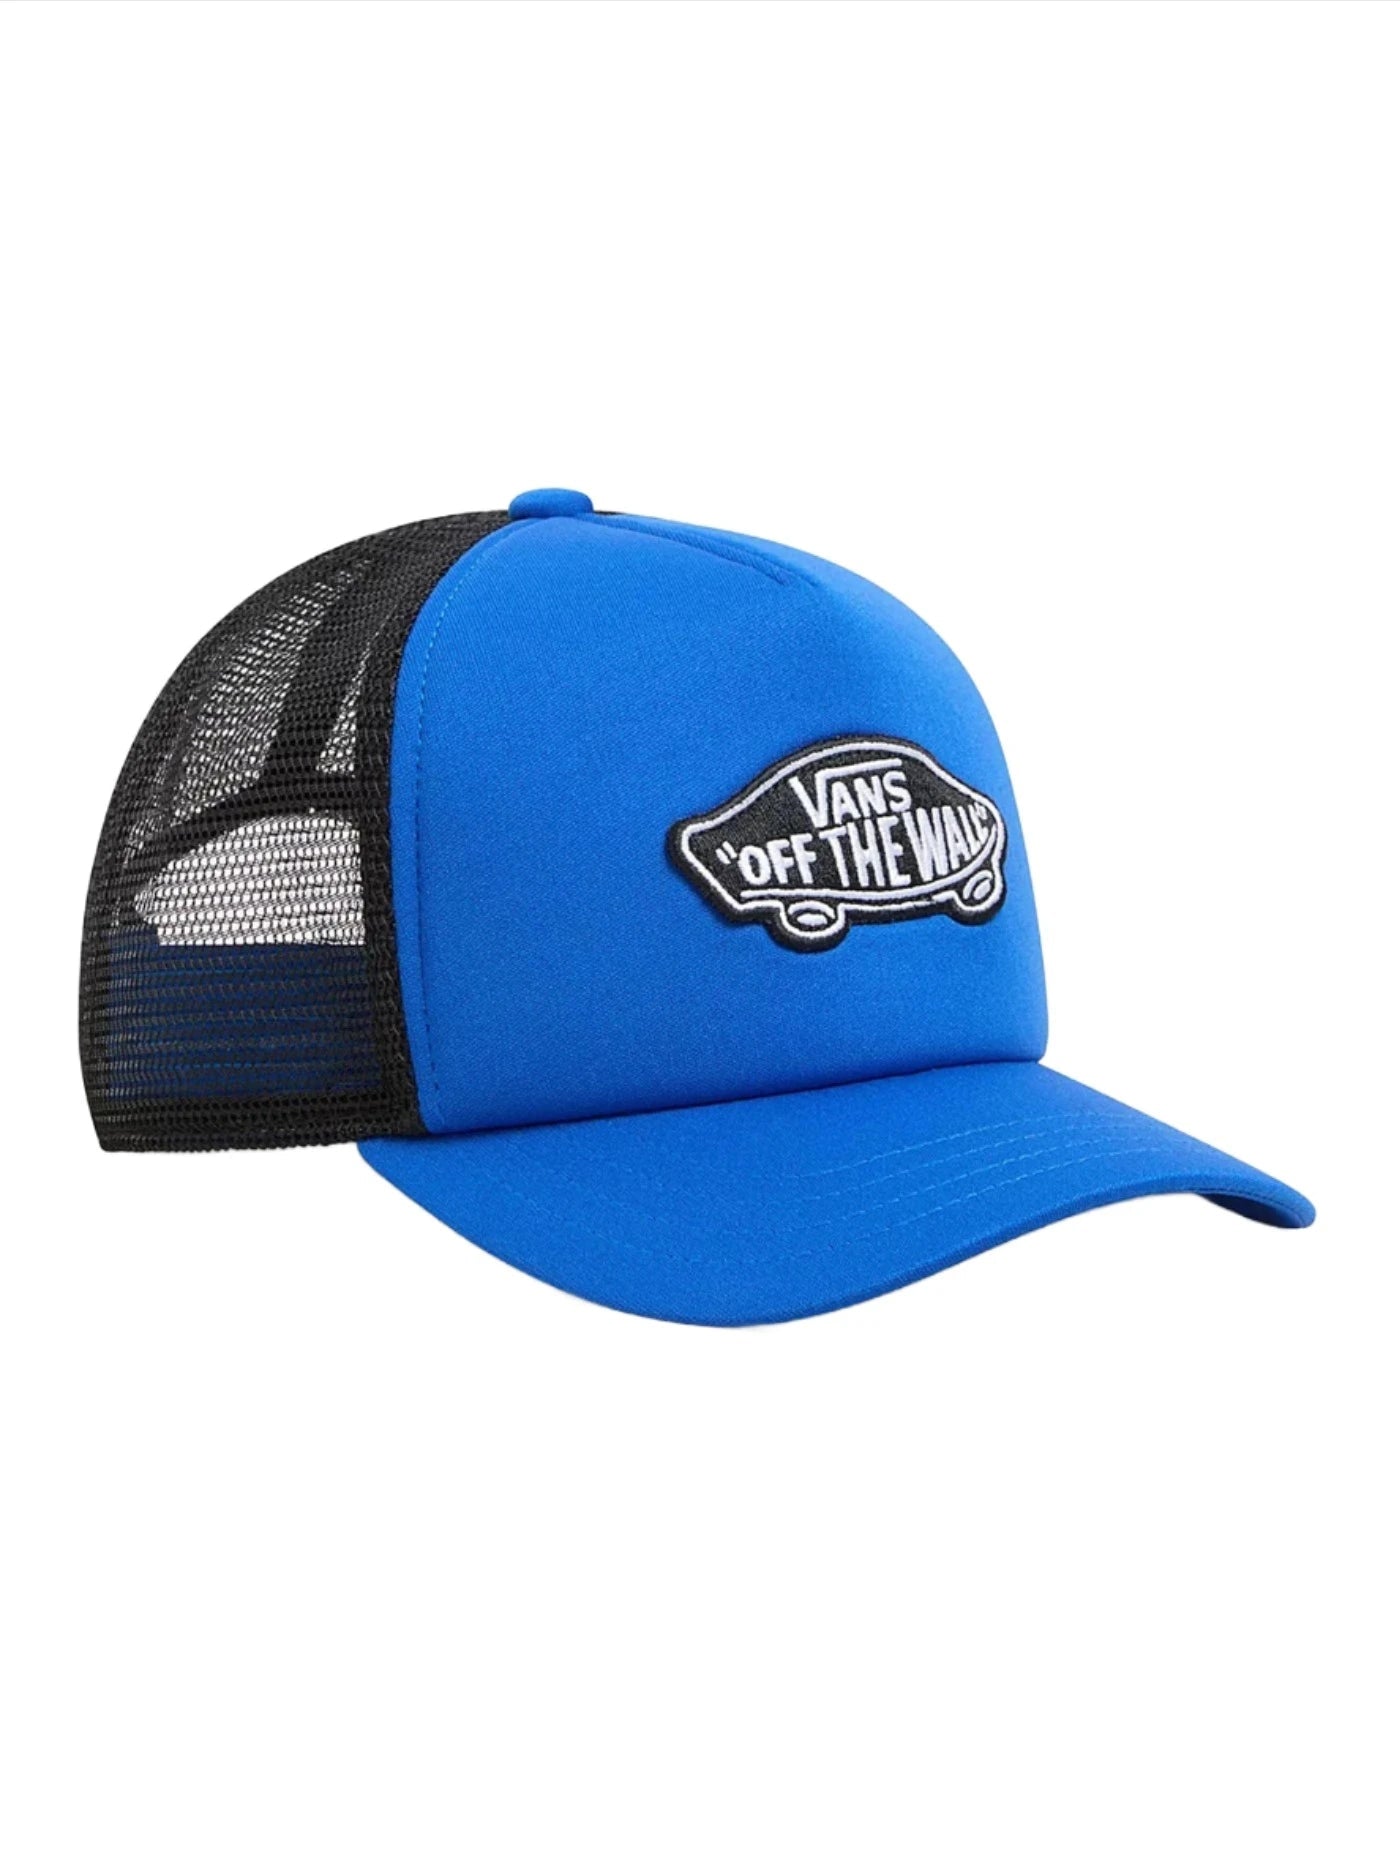 VANS Kids Classic Patch Curved Bill Trucker Hat Surf The Web Boy's Hats Vans 